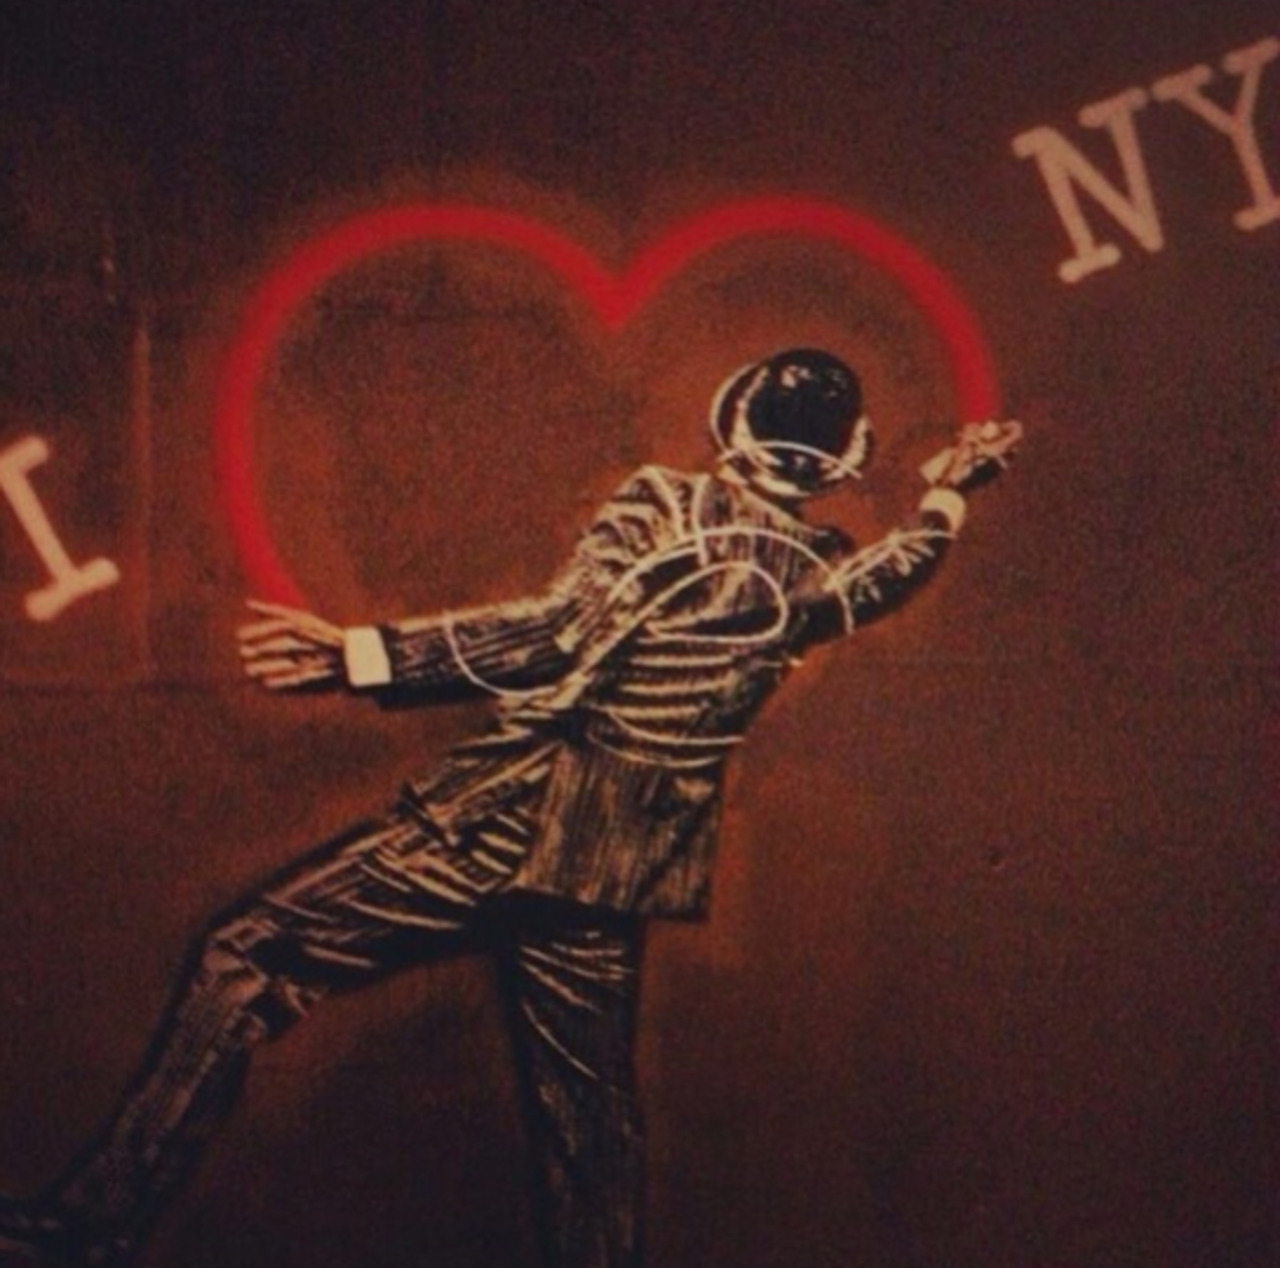 I love New York #banksy #nyc #newyorkcity #art #streetart #streetartnyc #graffiti #publicart #paint #create #heart http://t.co/2HoX4n1flD